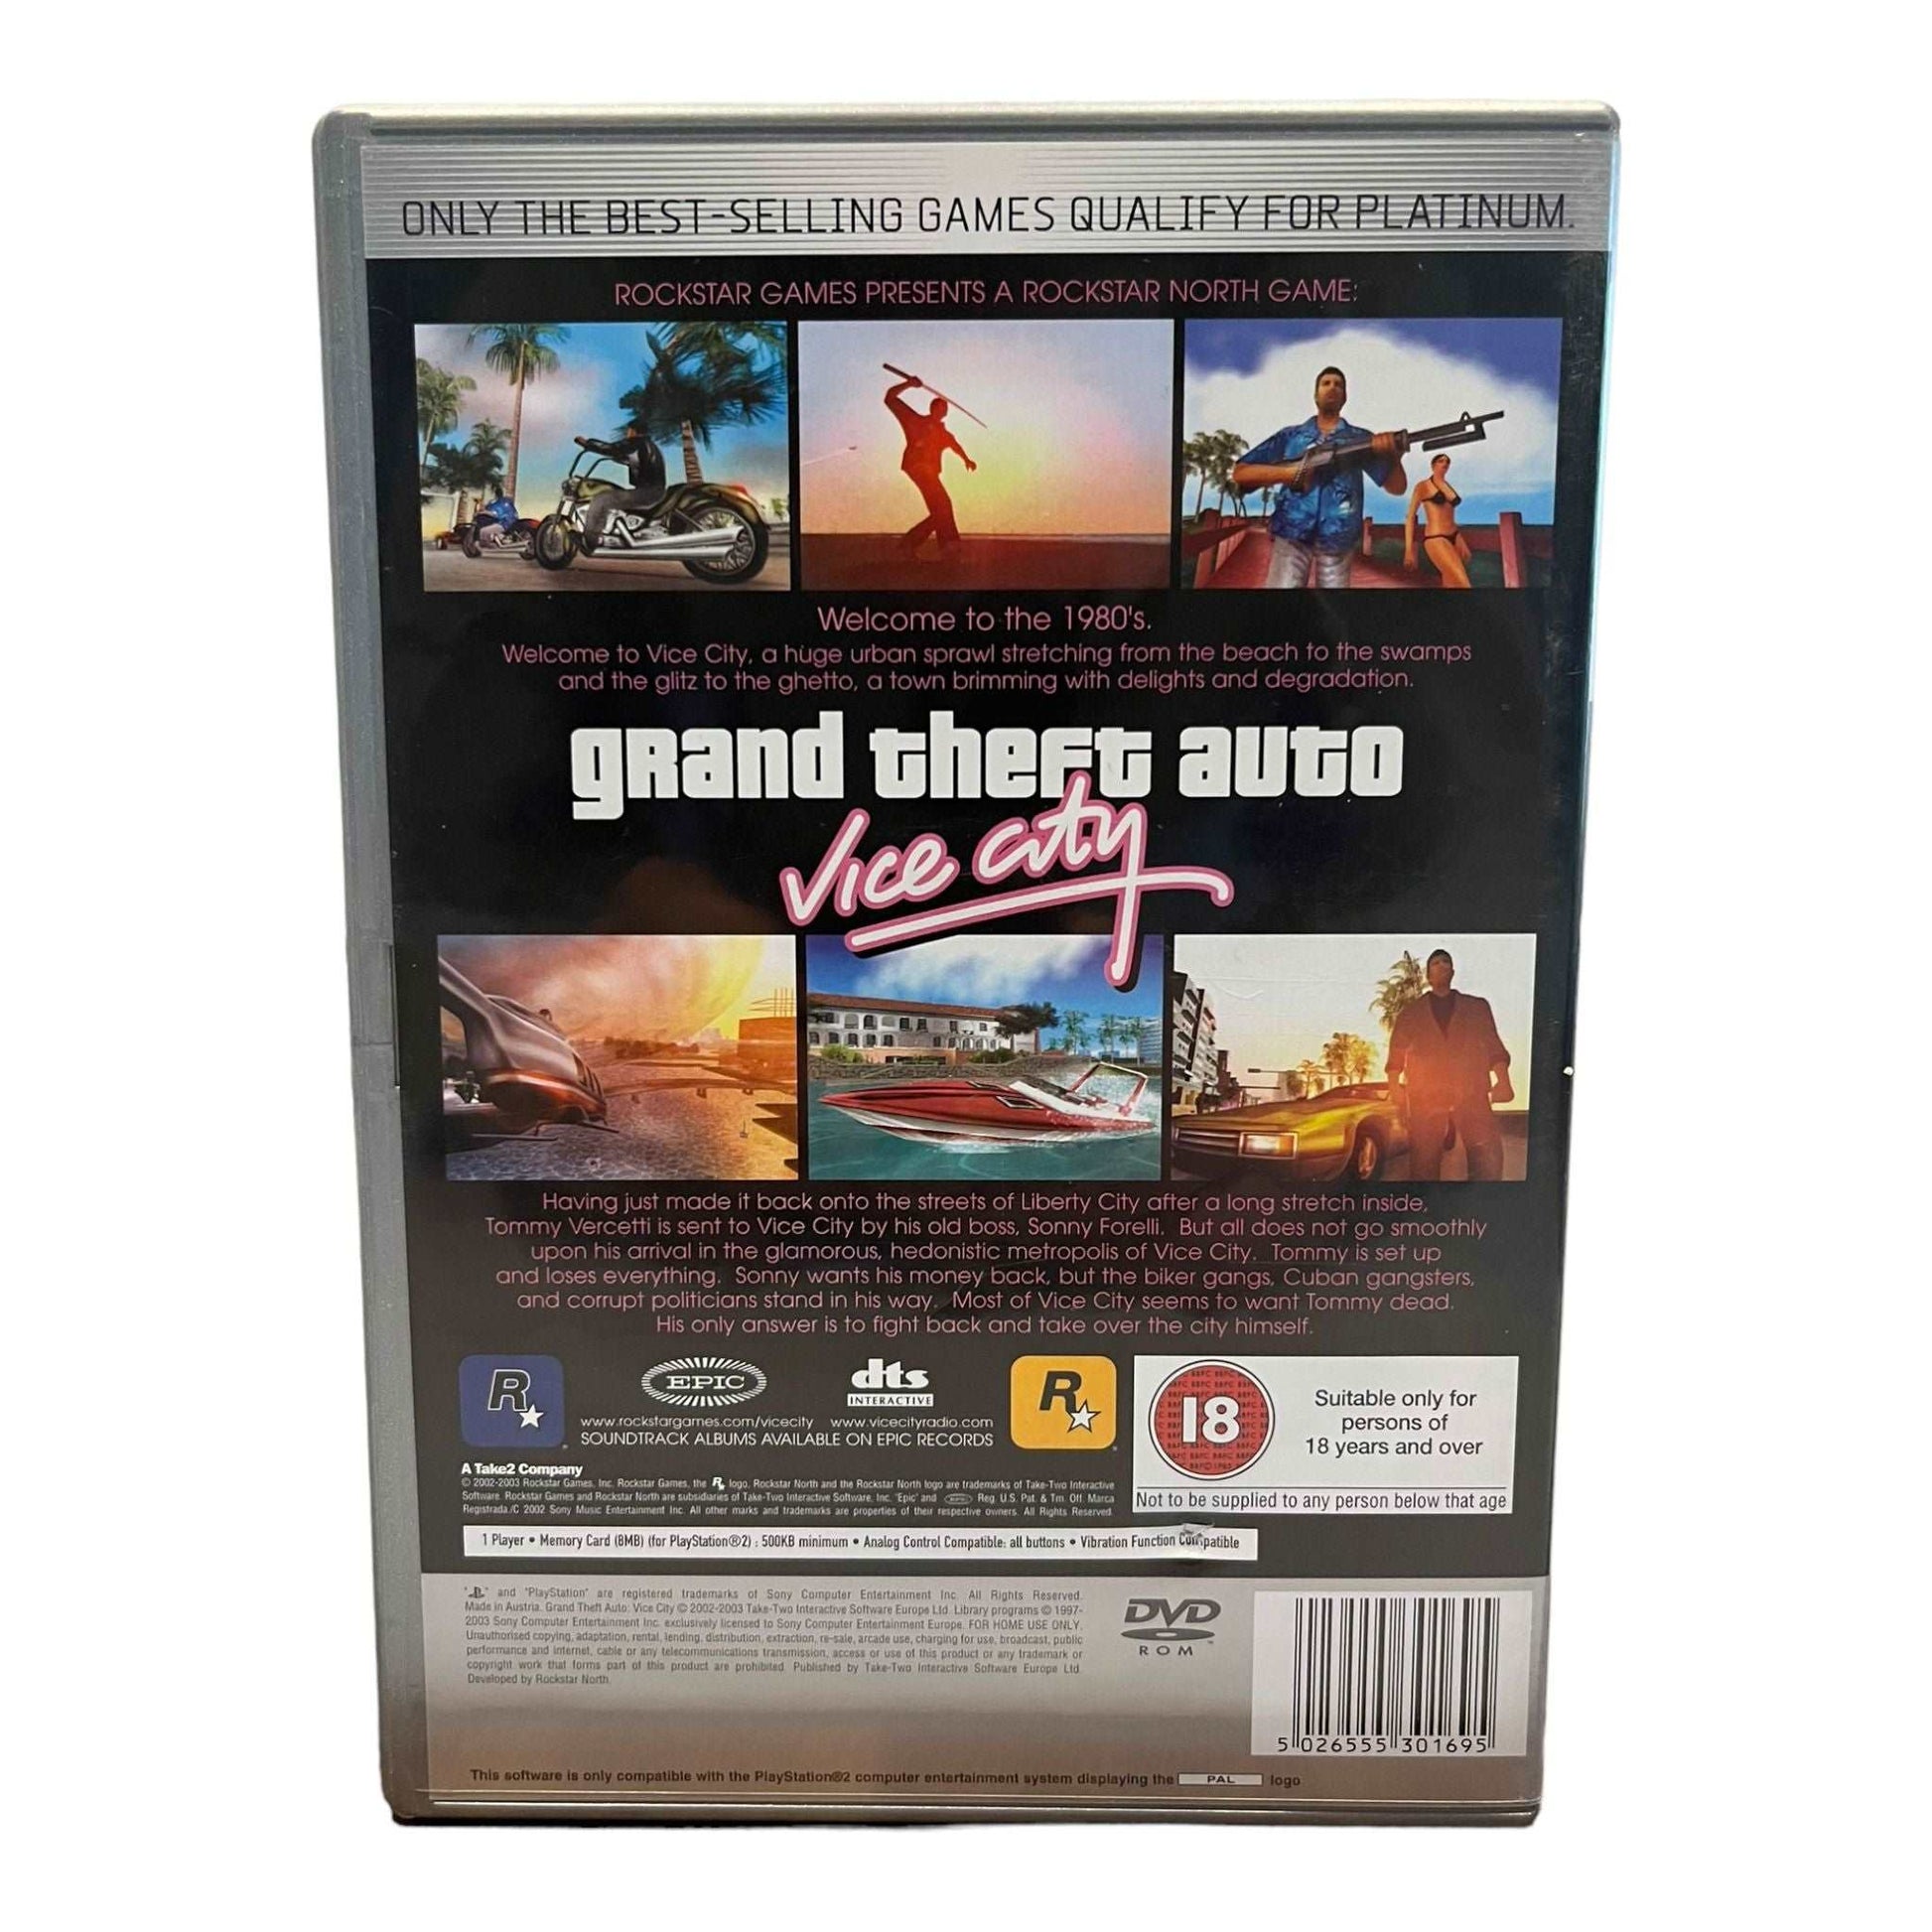 Grand Theft Auto: Vice City - PS2 - Platinum